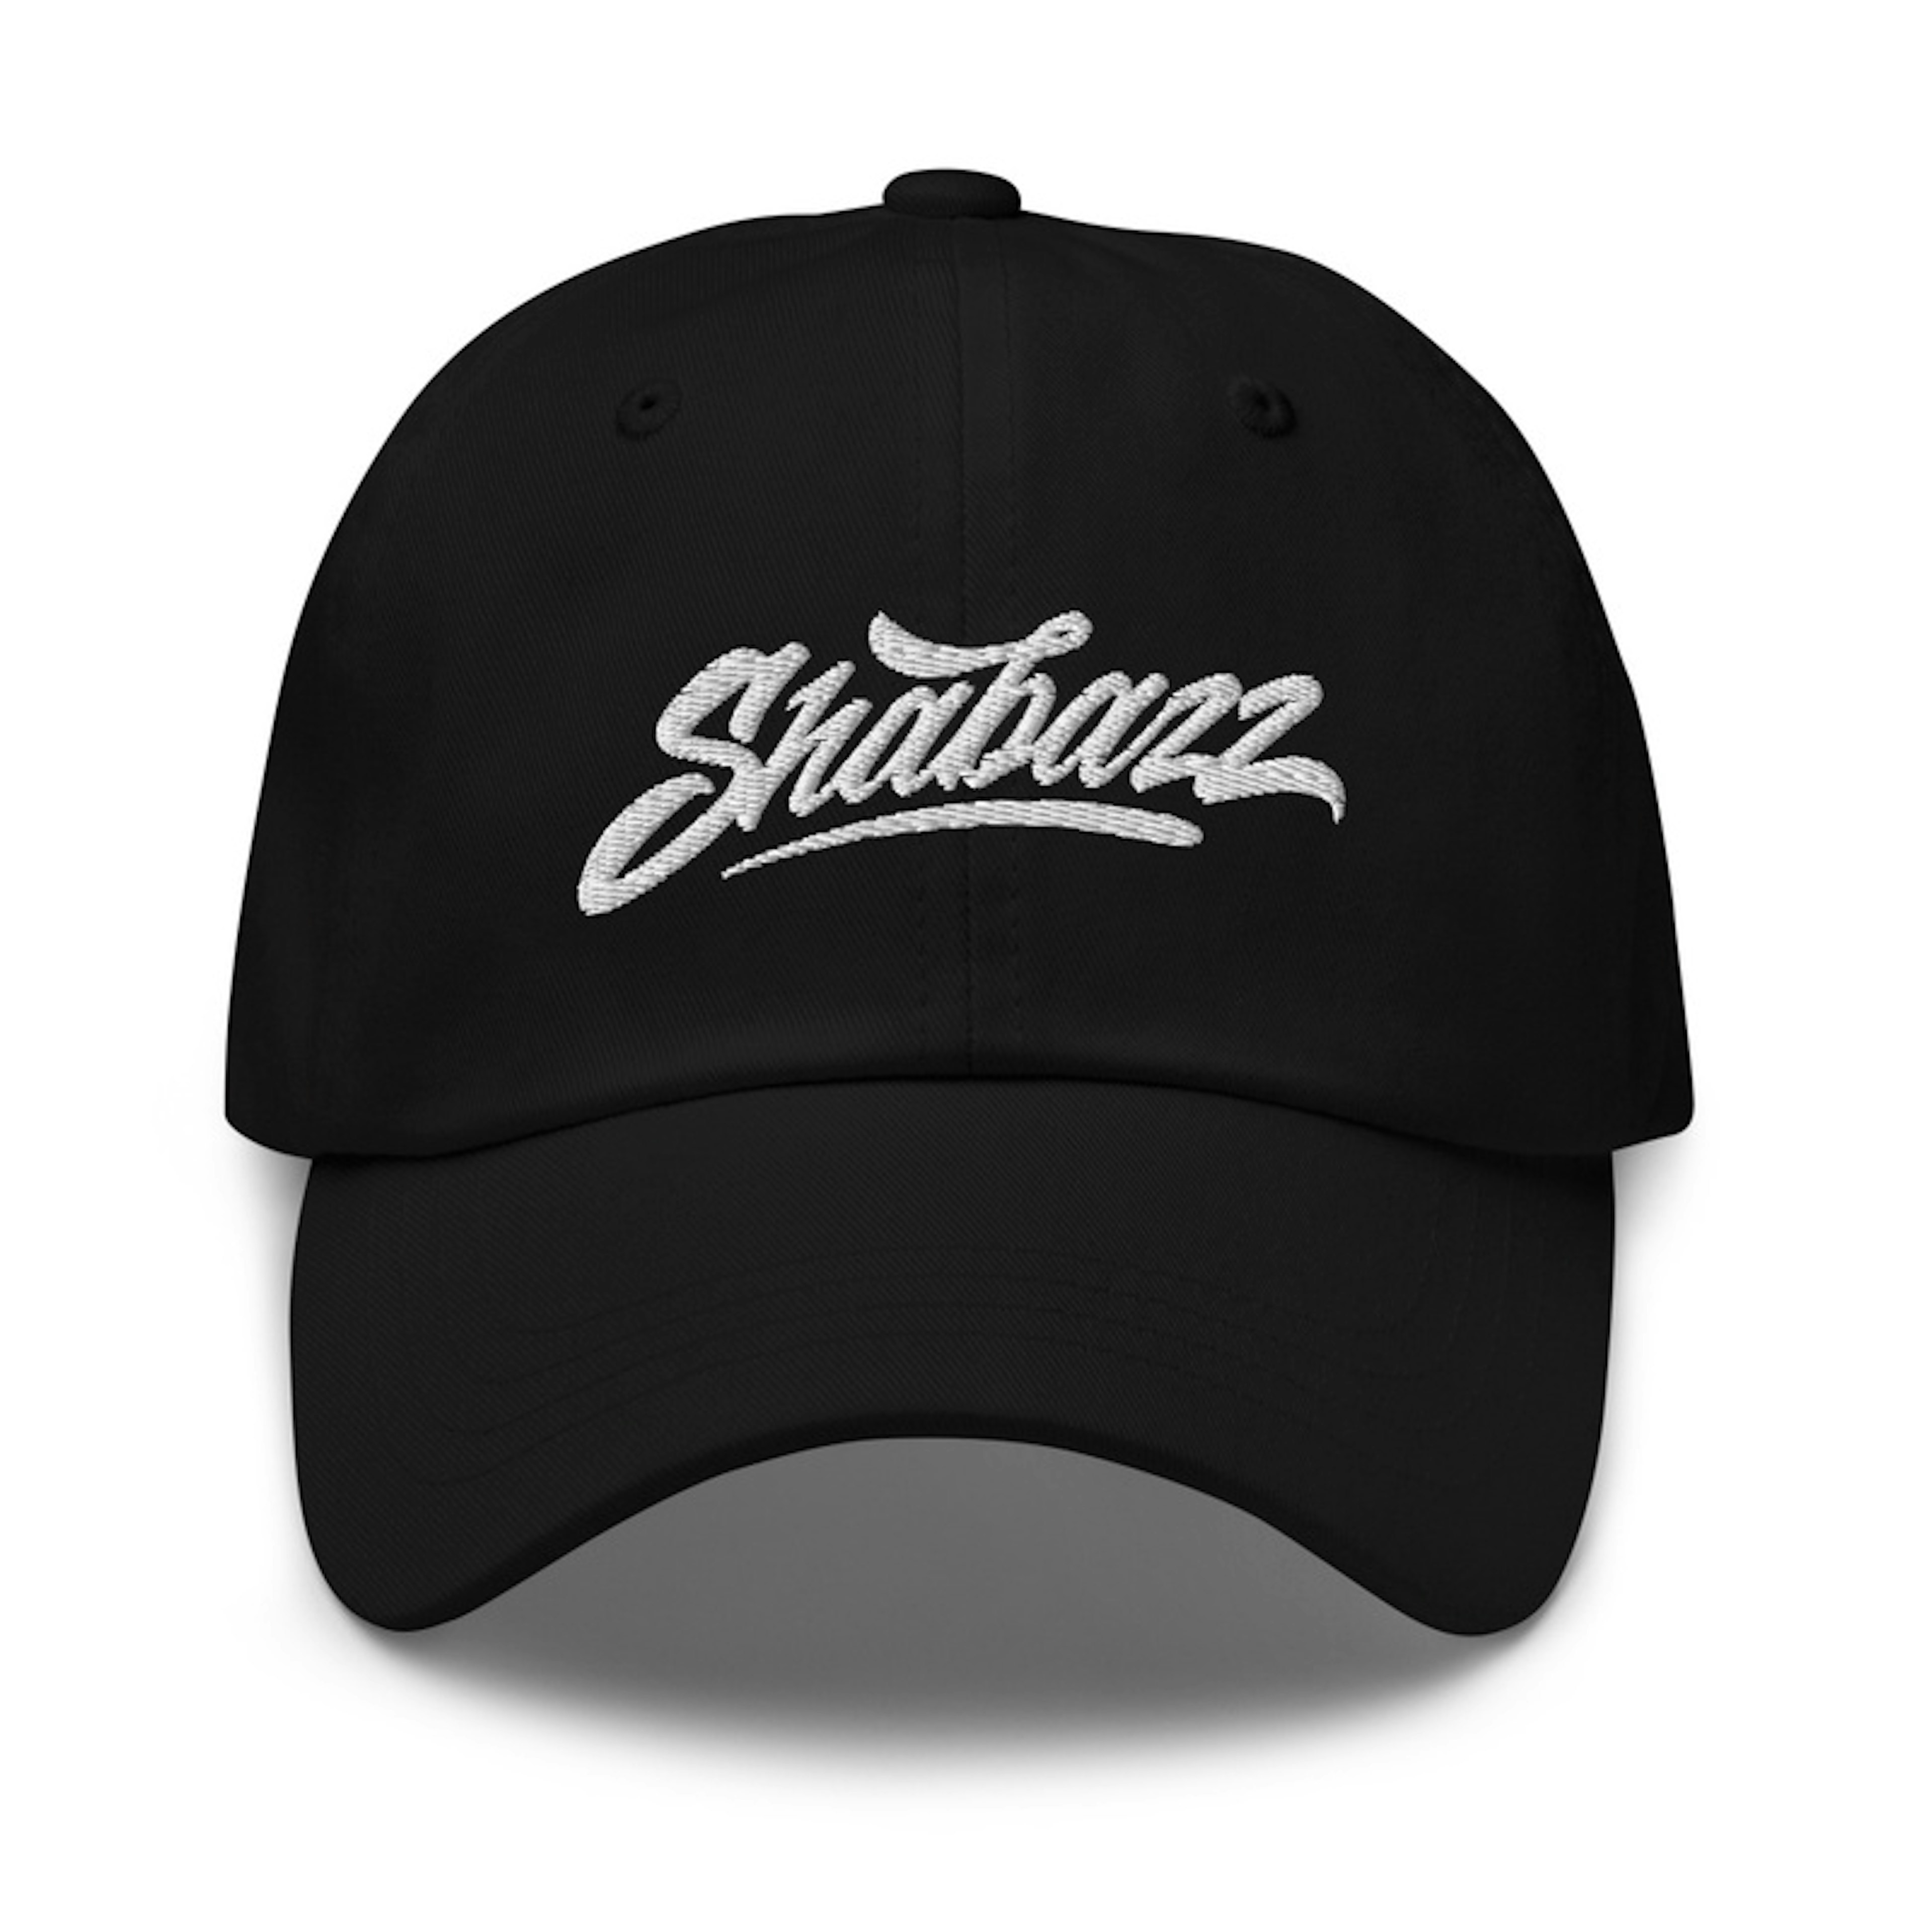 Shabazz Hat